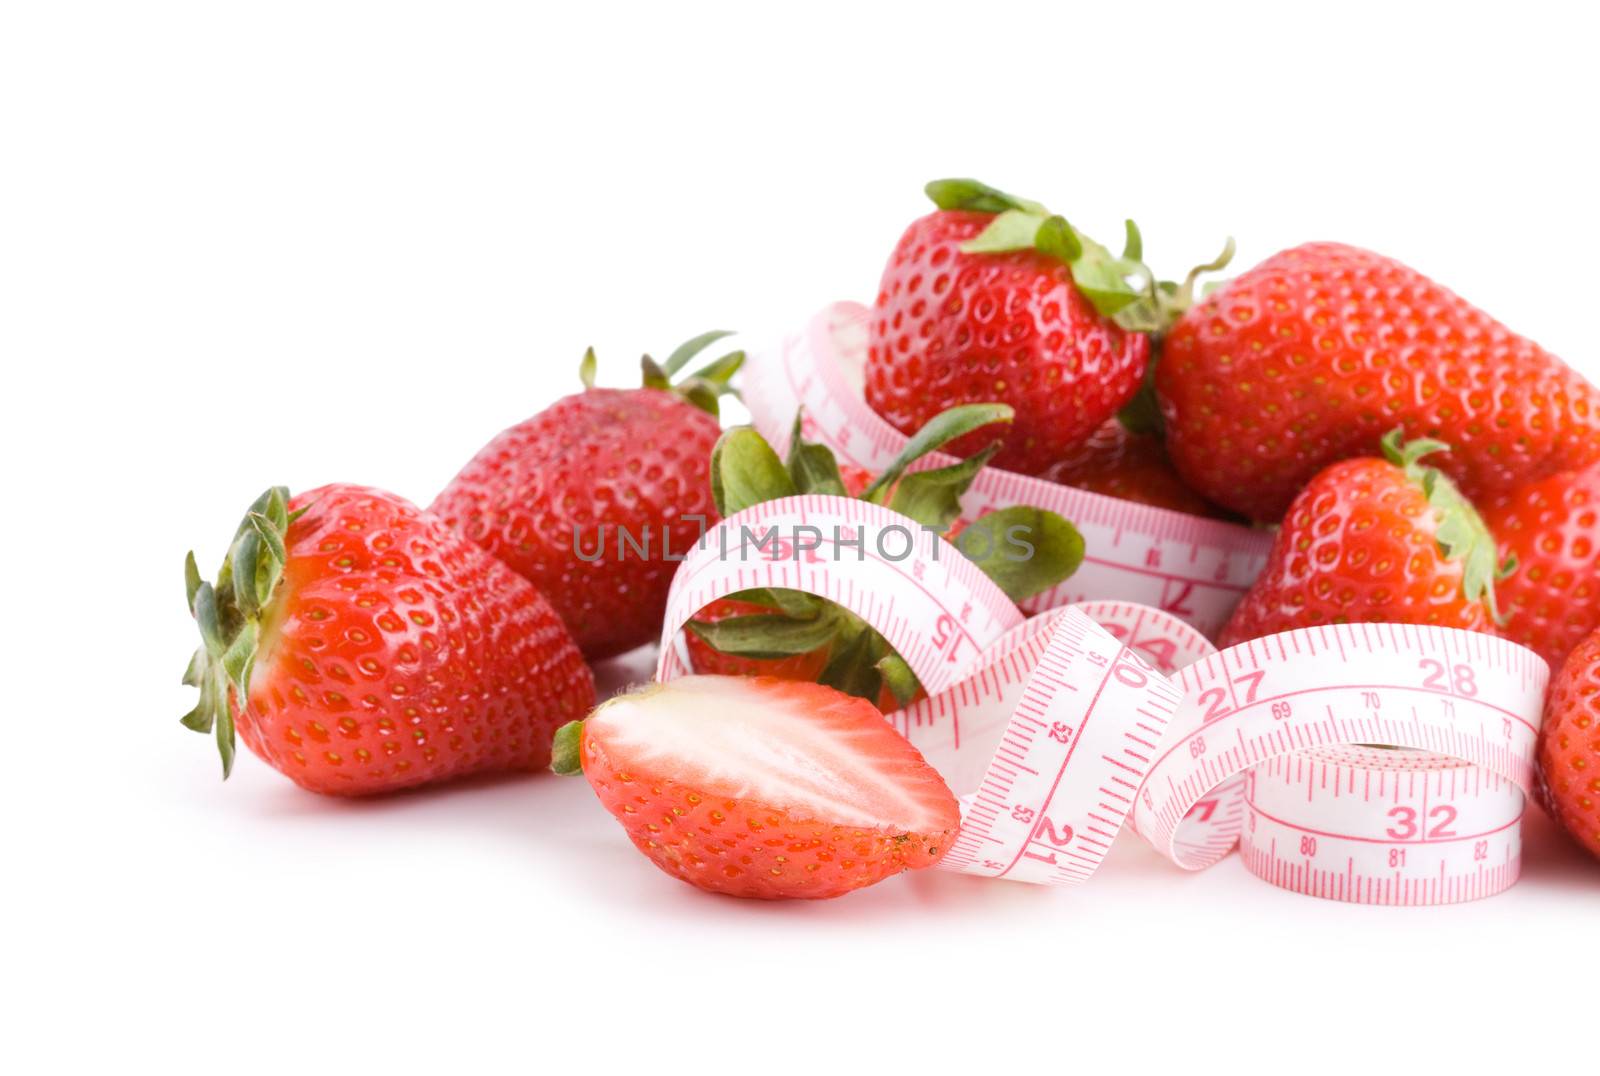 Fit strawberries by Gbuglok